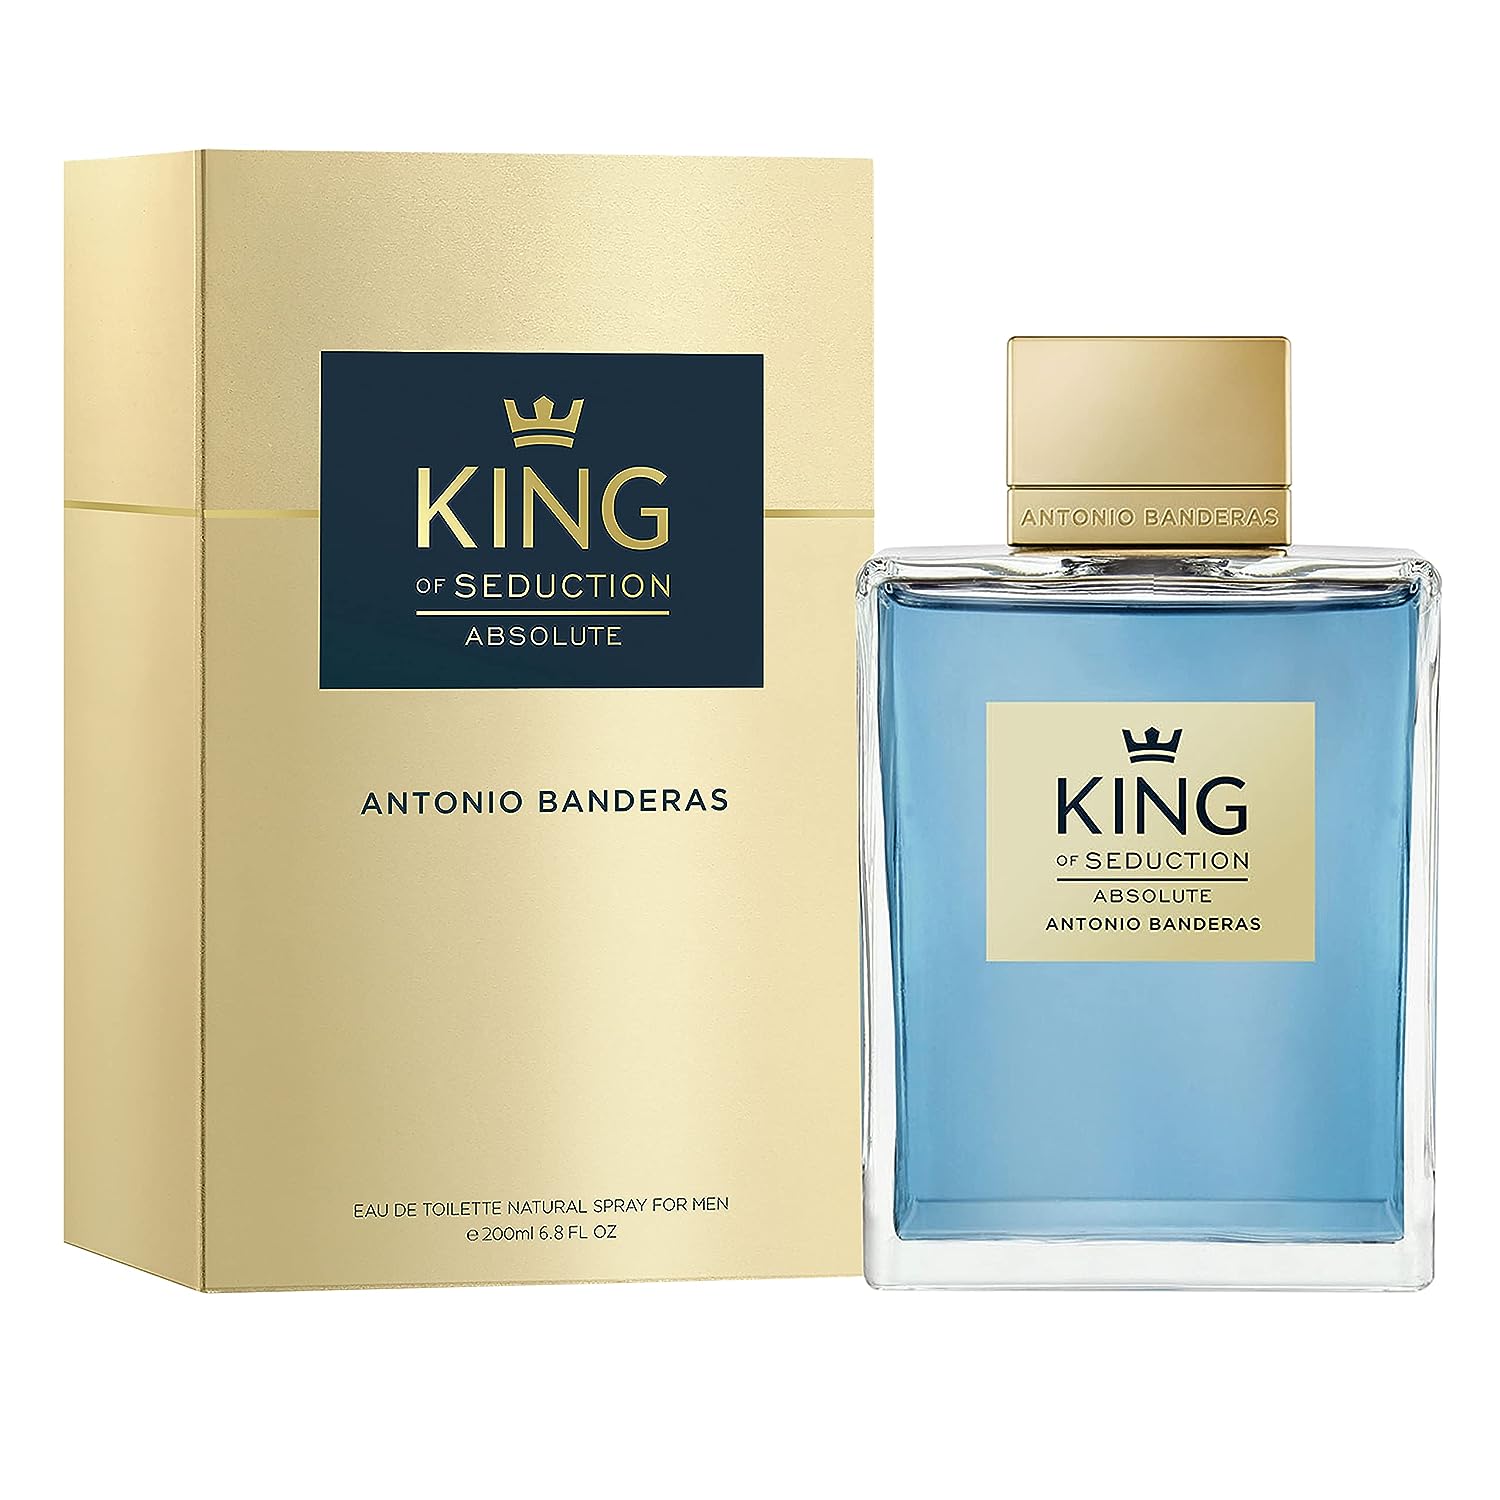 Antonio Banderas, King of Seduction Absolute, 200 ml